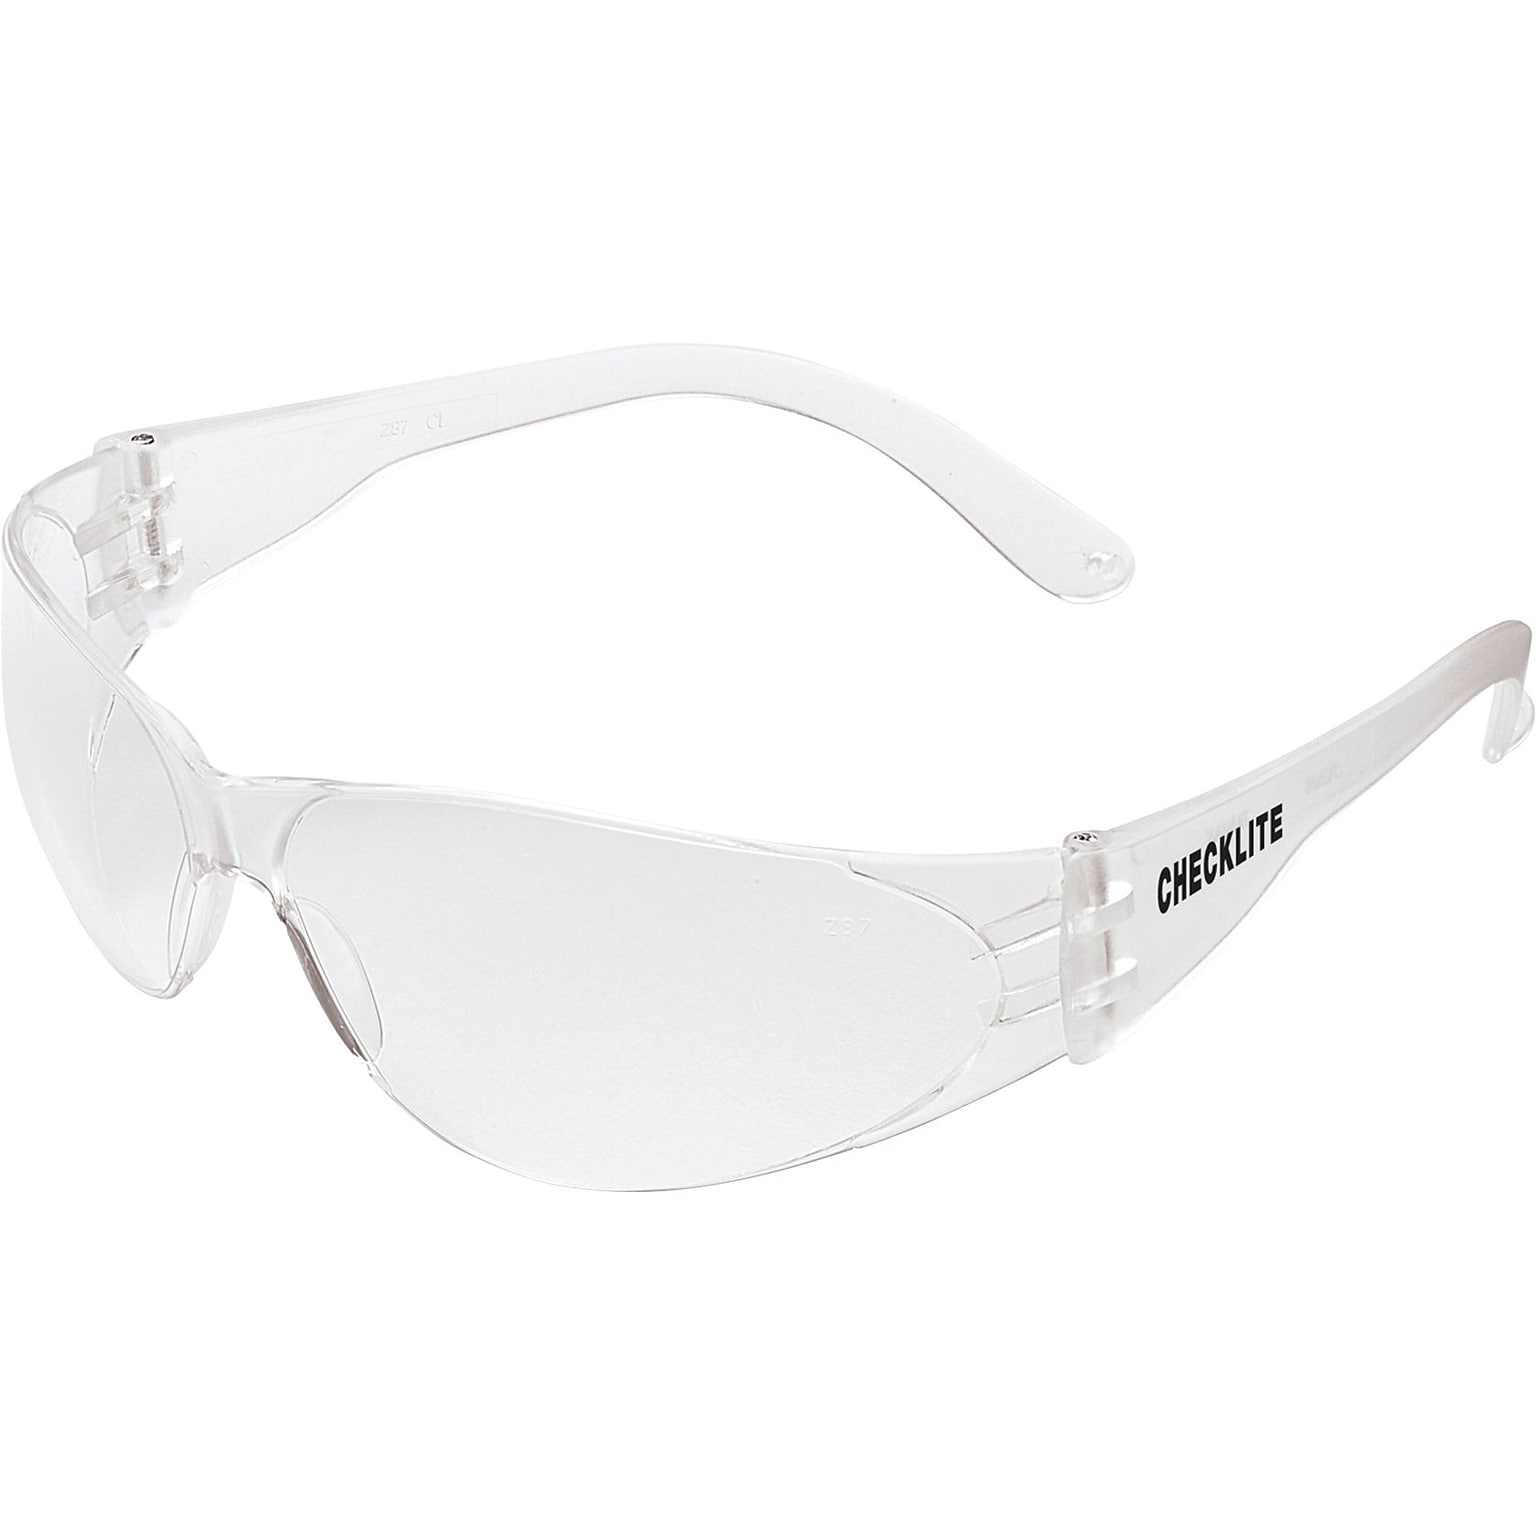 MCR Safety® Crews Checklite® Safety Glasses, Clear, Anti-Fog, 1 Each